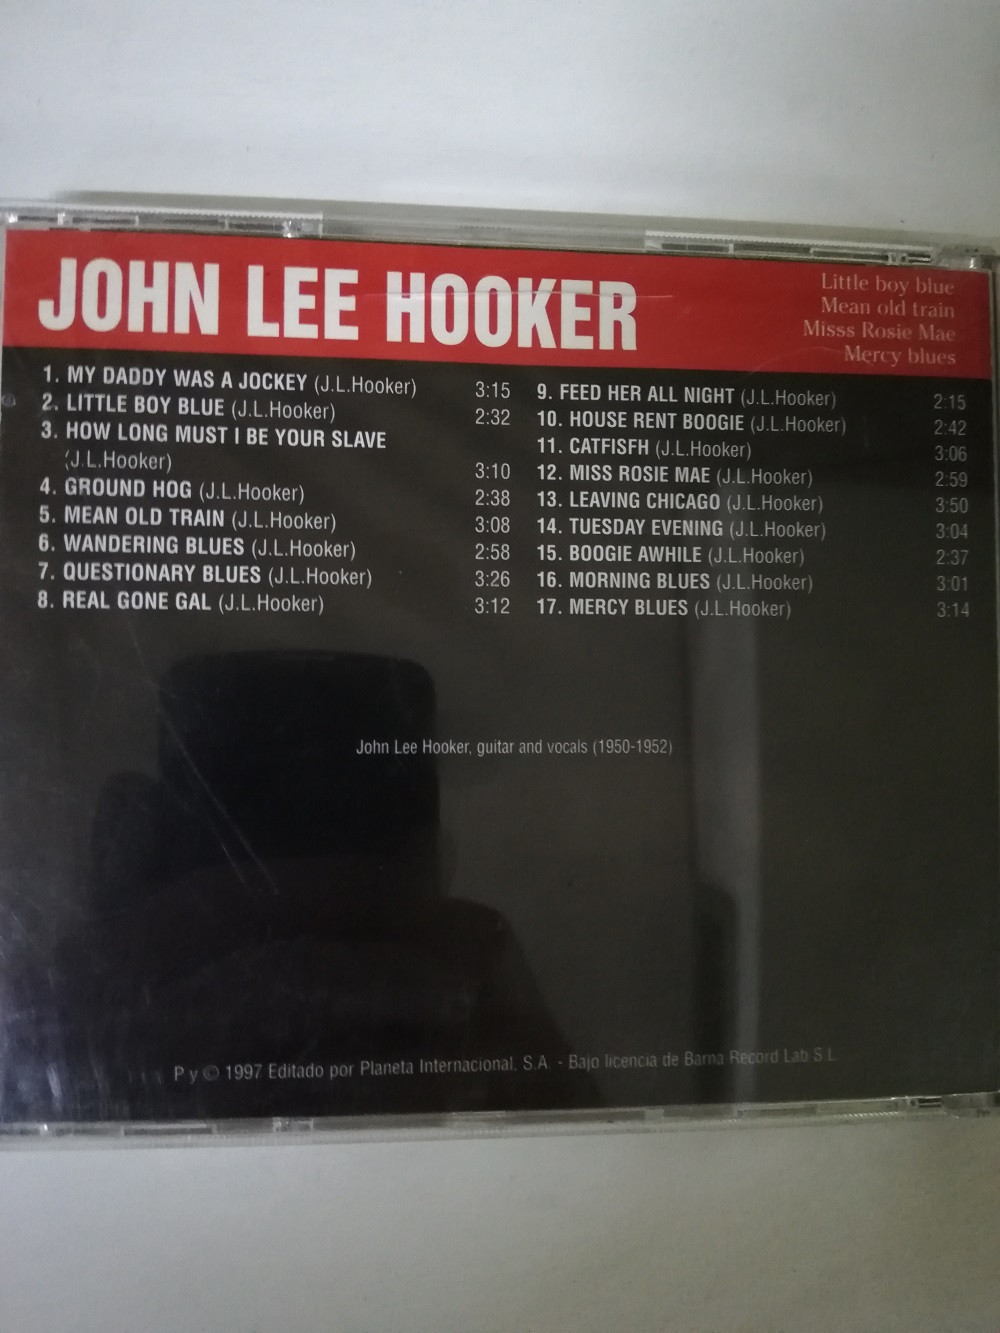 Imagen CD JOHN LEE HOOKER - JAZZ & BLUES COLLECTION 2